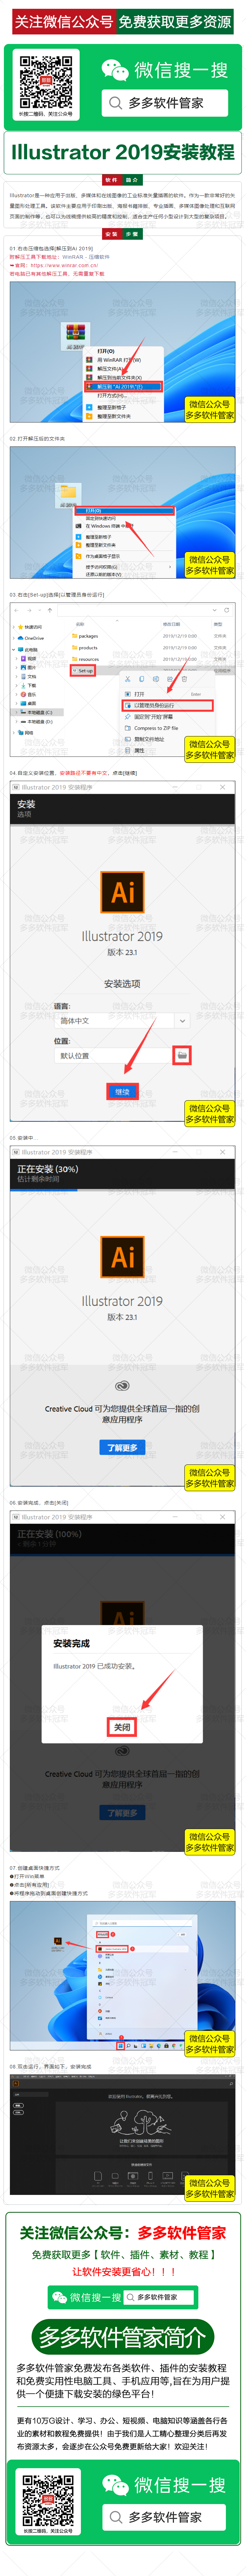 Illustrator 2019安装步骤.png